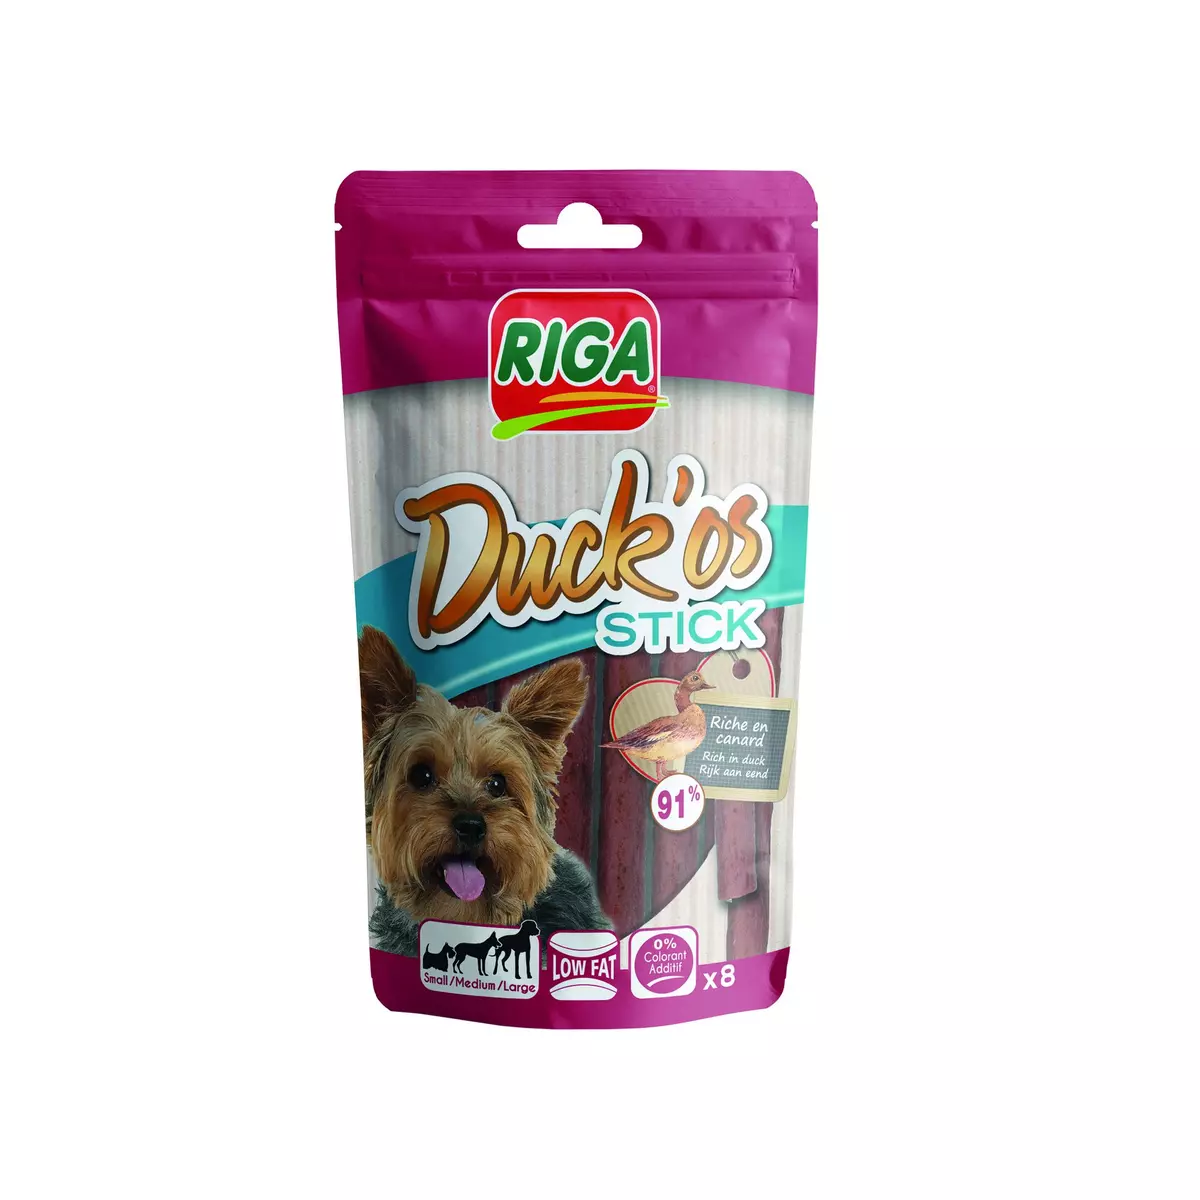 RIGA Duck'os stick riche en canard pour chien 8 sticks 70g